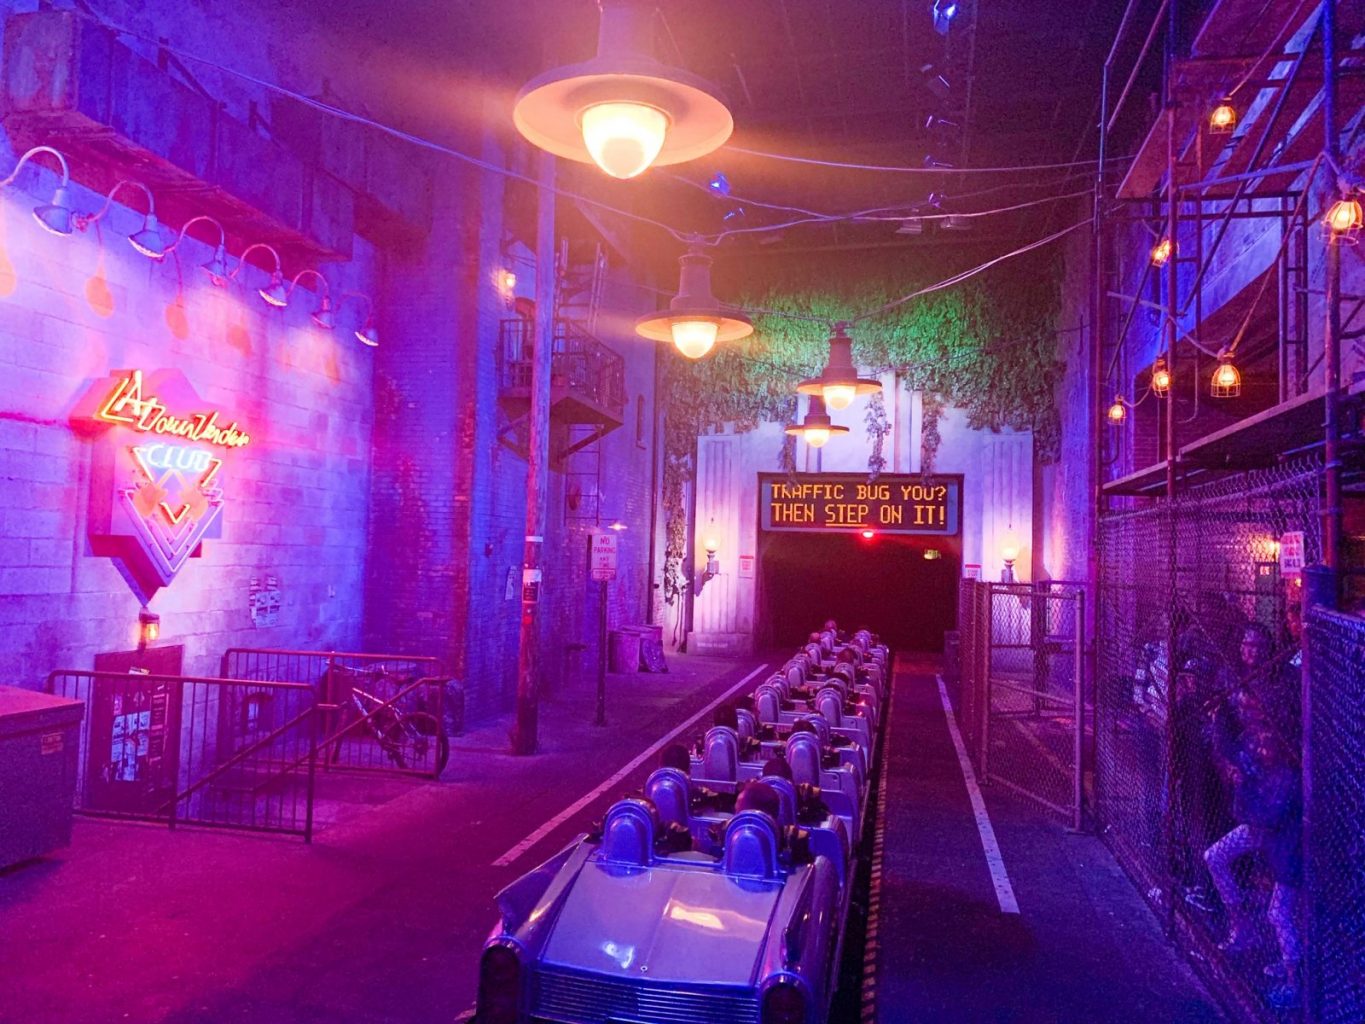 Disney single rider inside of Rock'n'Roller coaster at Hollywood Studios, empty roller coaster seats